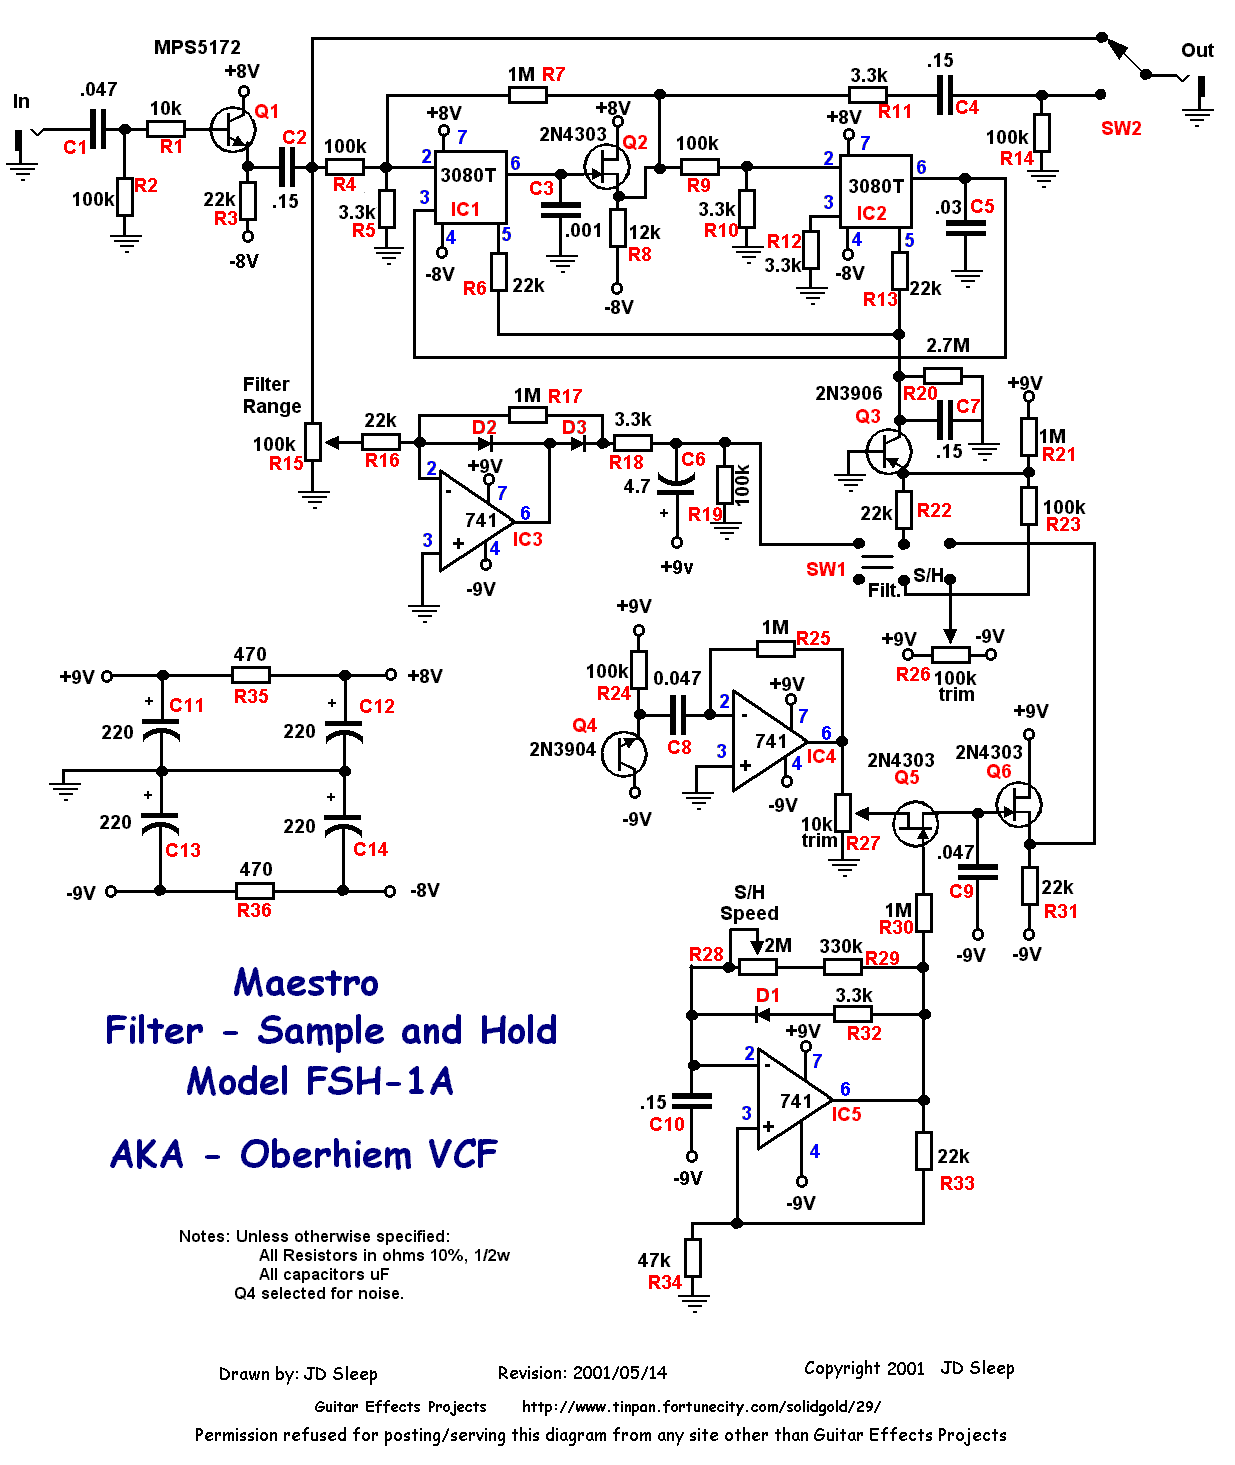 Схема Maestro - Sample and Hold FSH-1A